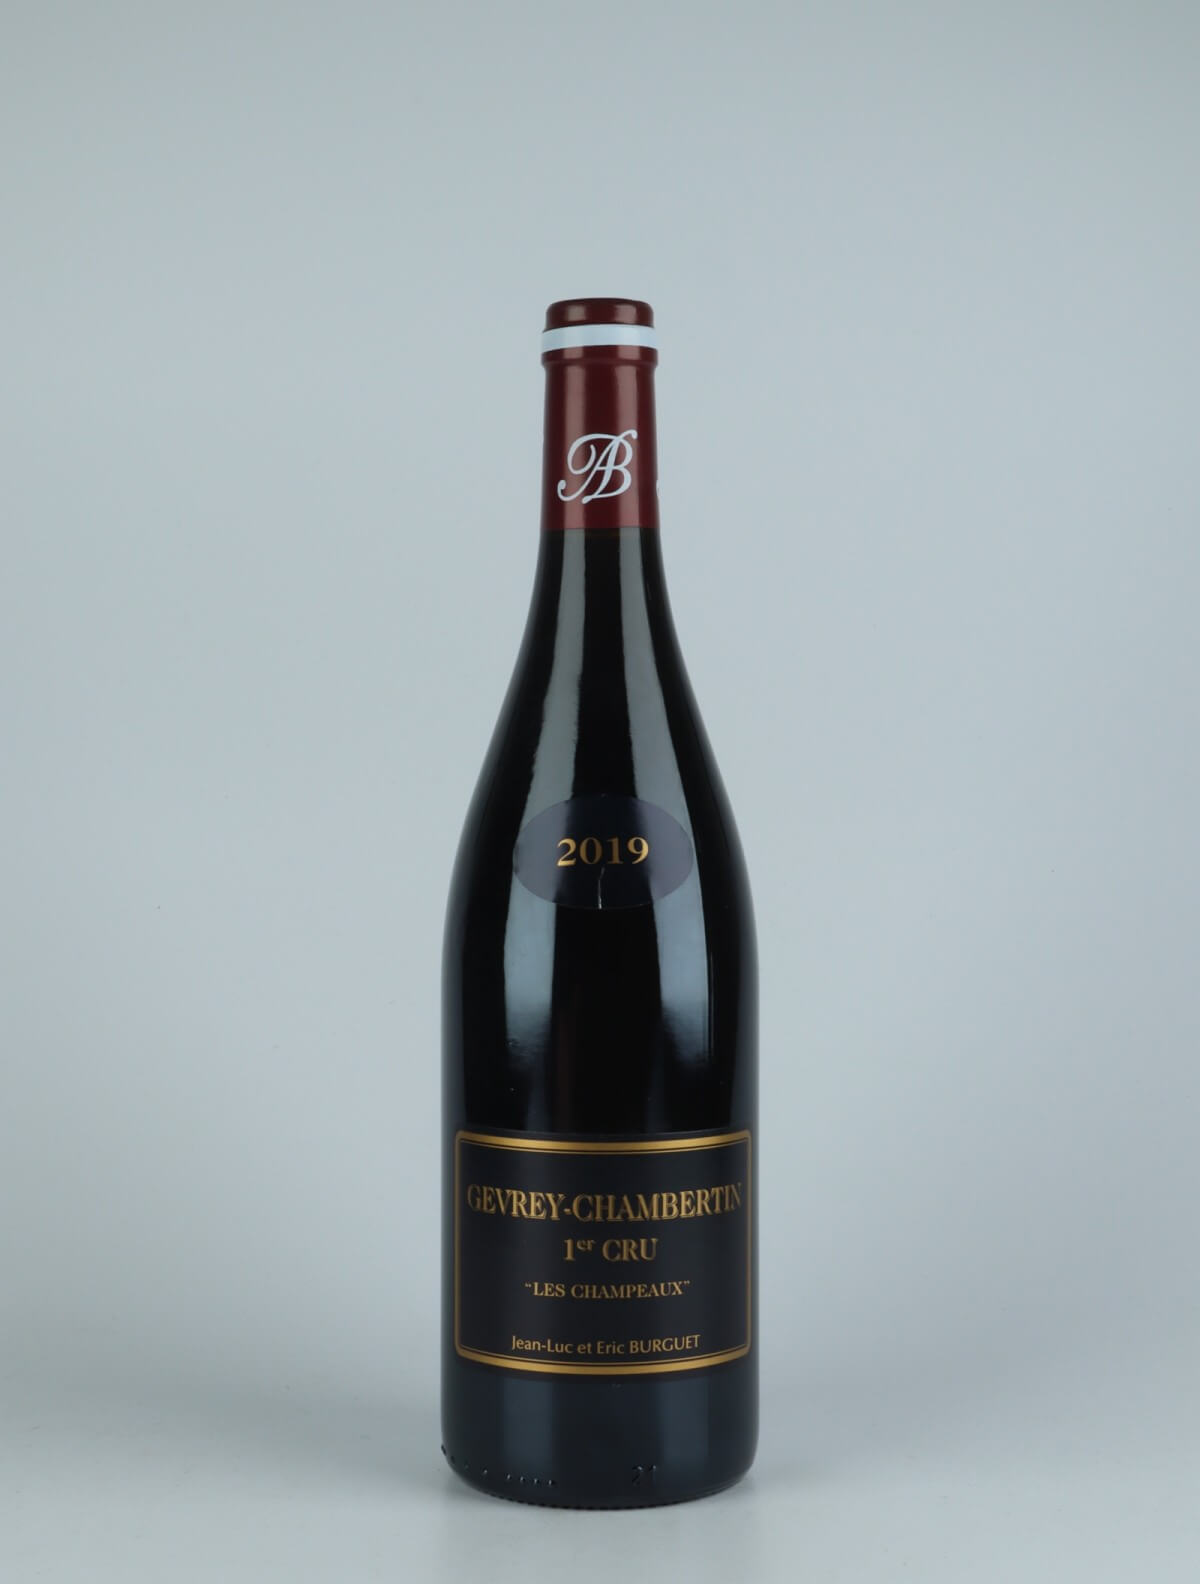 A bottle 2019 Gevrey-Chambertin 1. Cru Champeaux Red wine from Jean-Luc & Eric Burguet, Burgundy in France